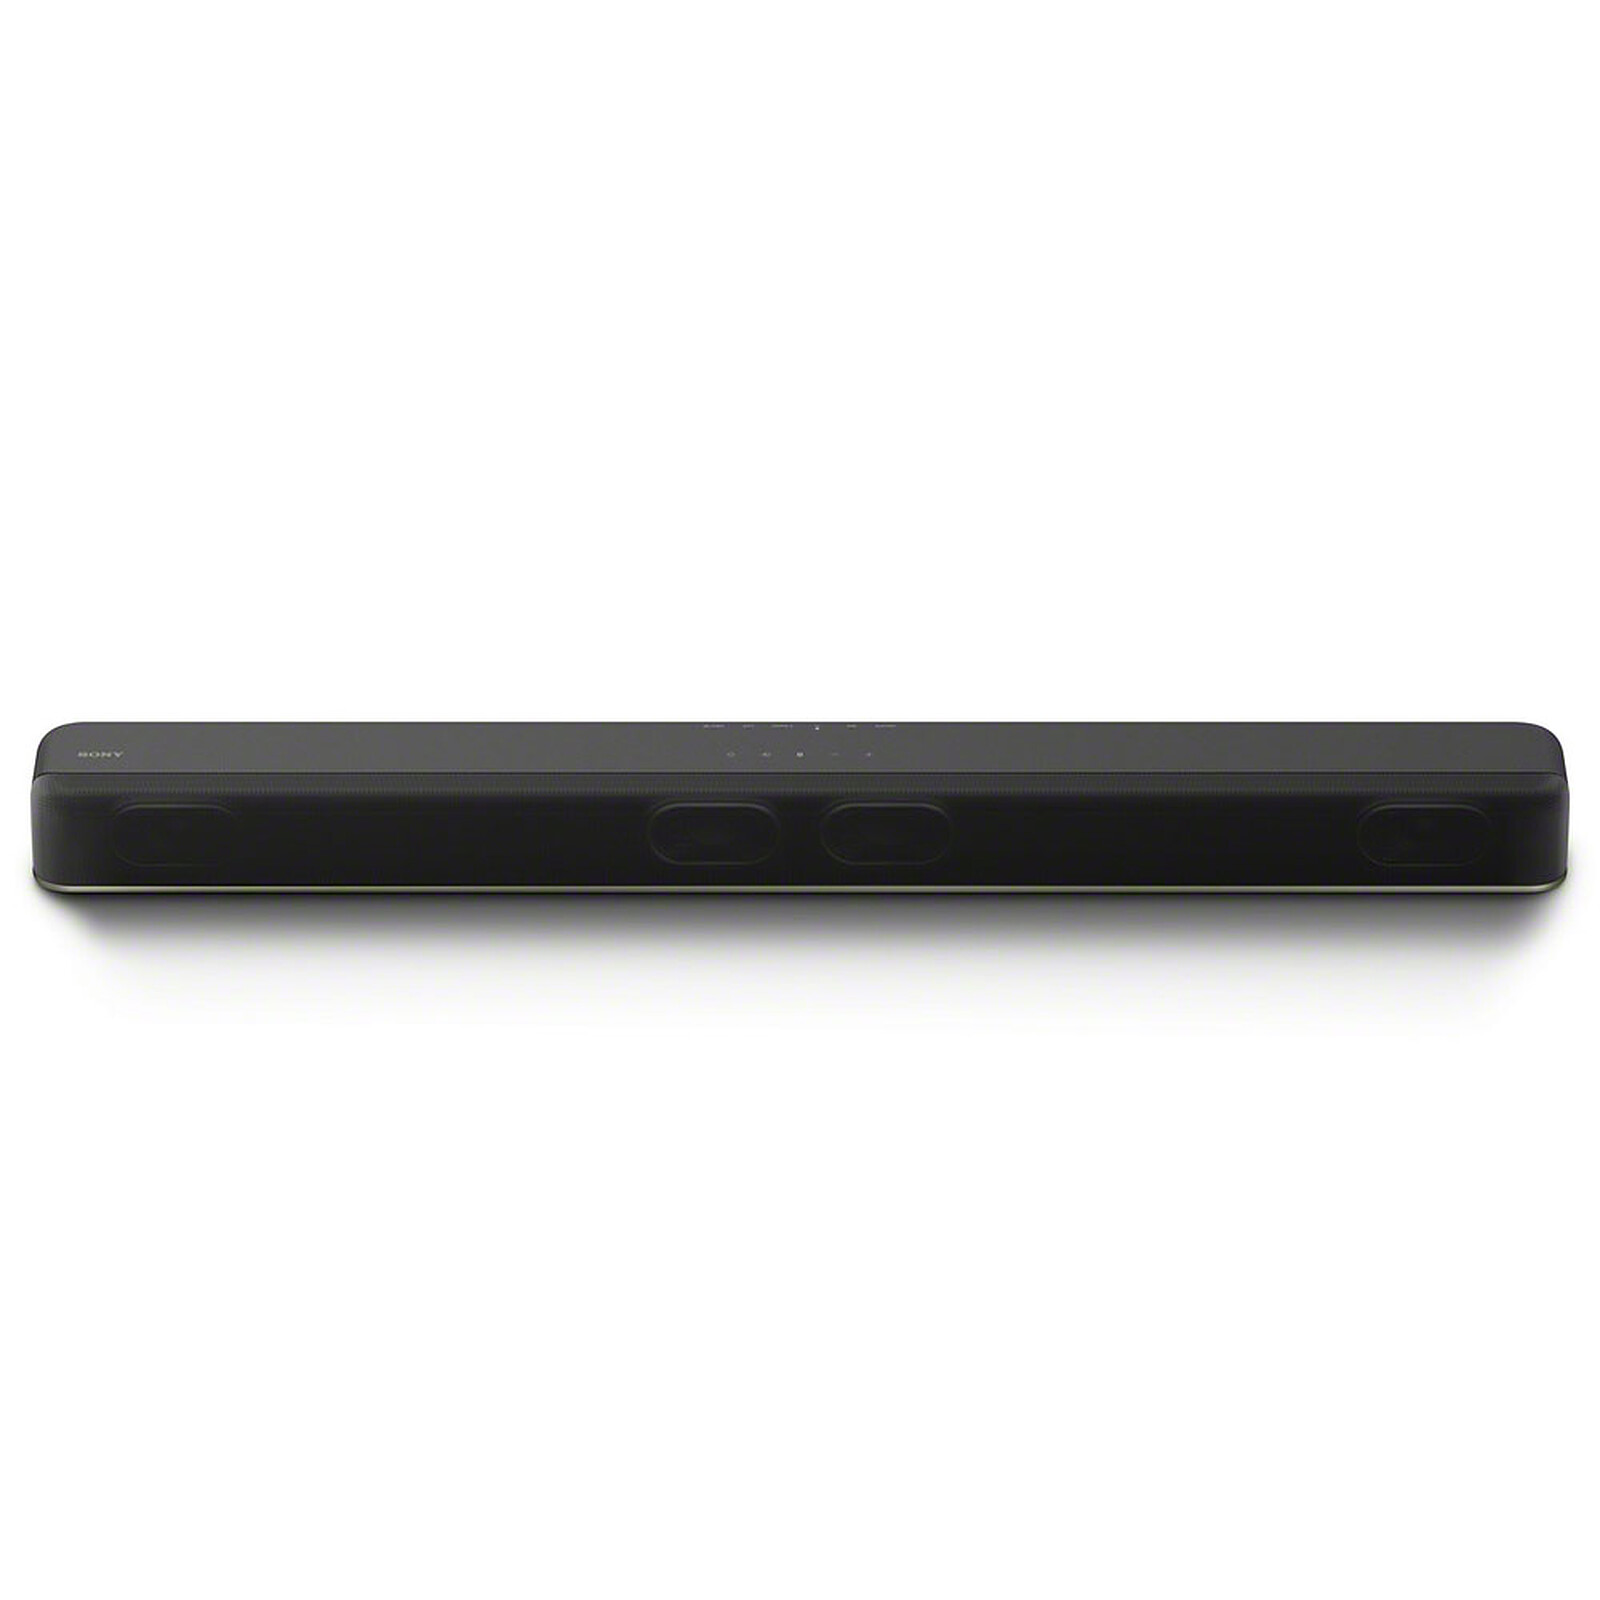 Sony HT-X8500 - Sound bar - LDLC 3-year warranty | Holy Moley